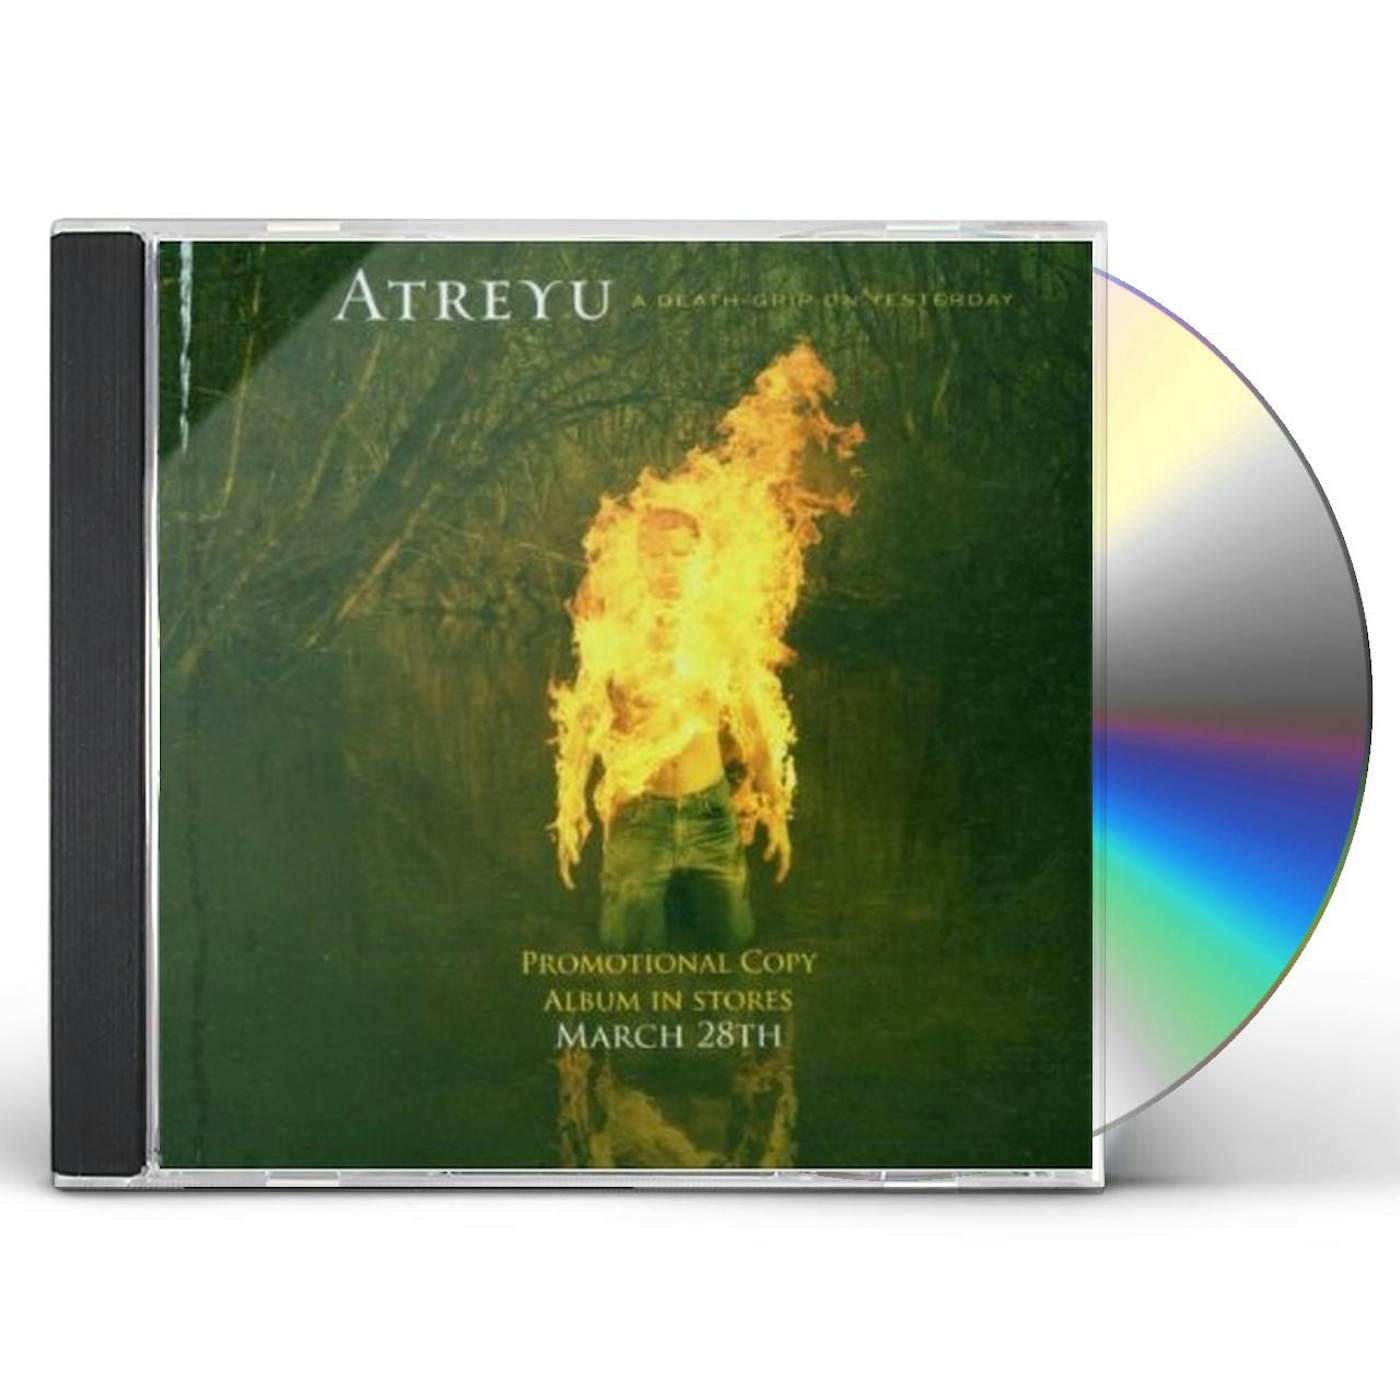 Atreyu DEATHGRIP ON YESTERDAY CD